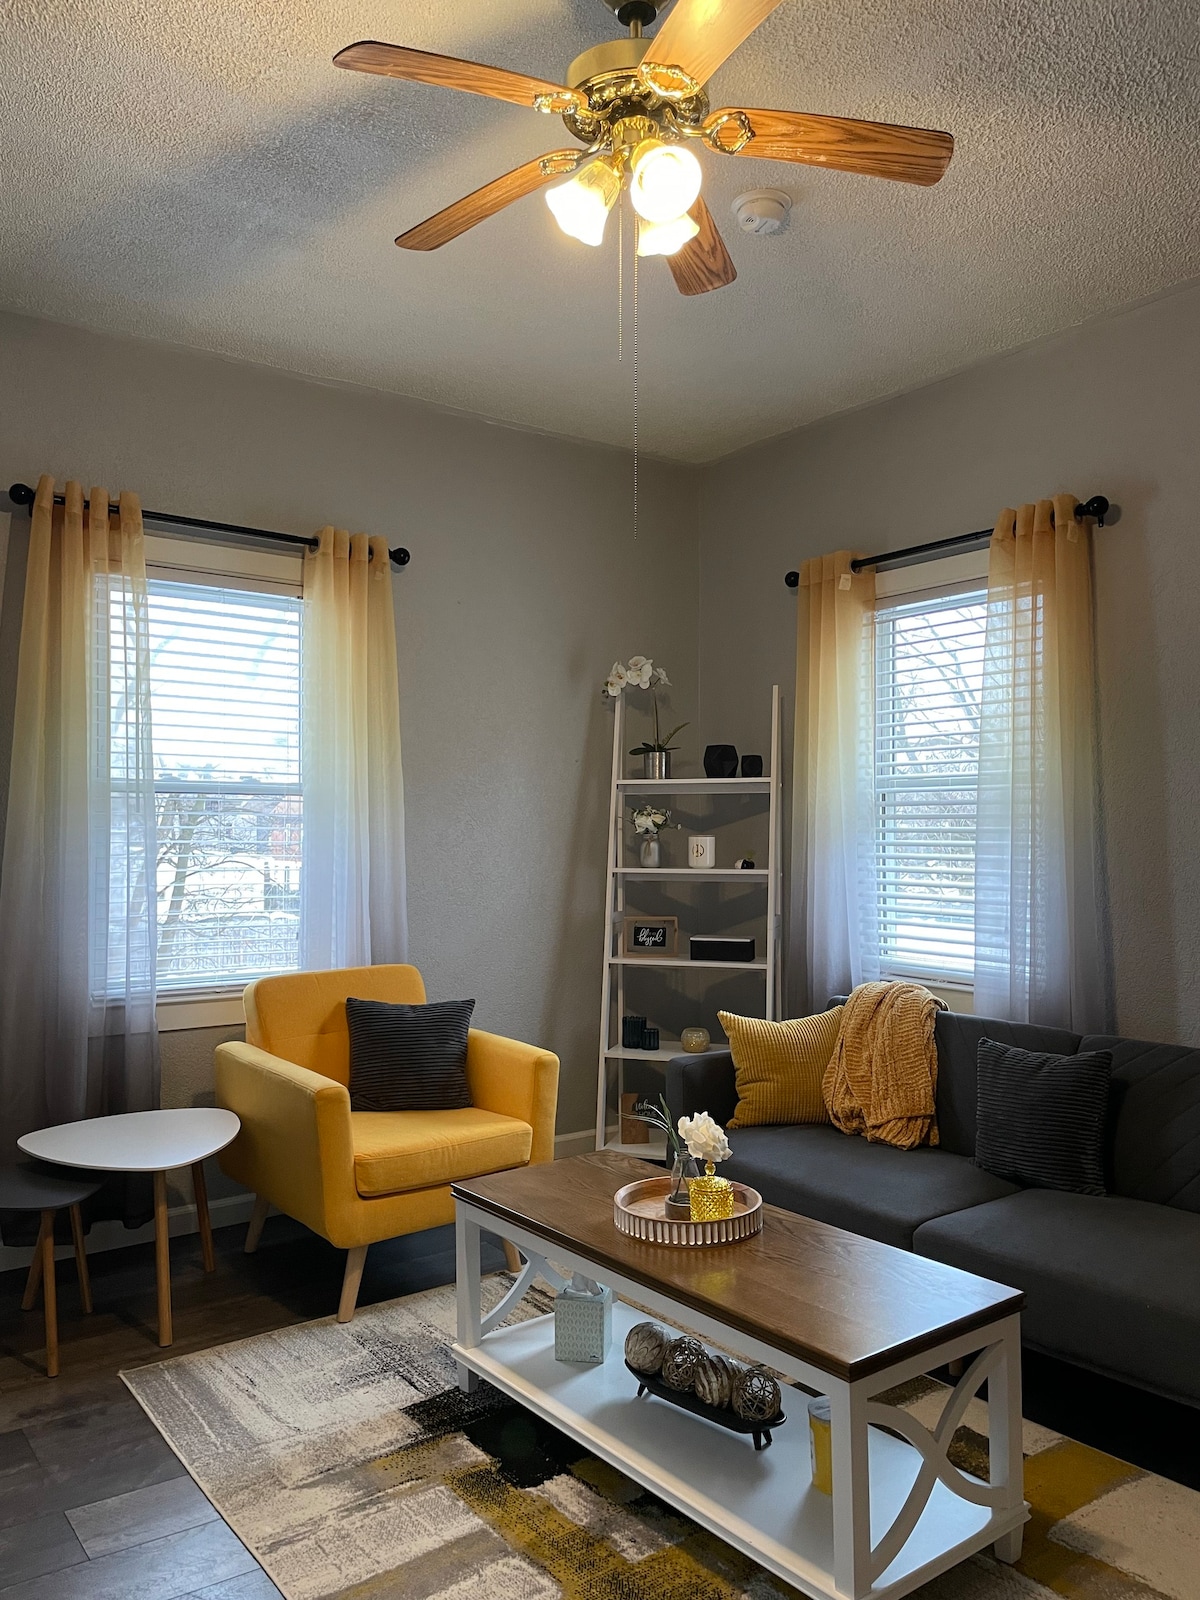 Modern 1 bedroom rental in Utica.